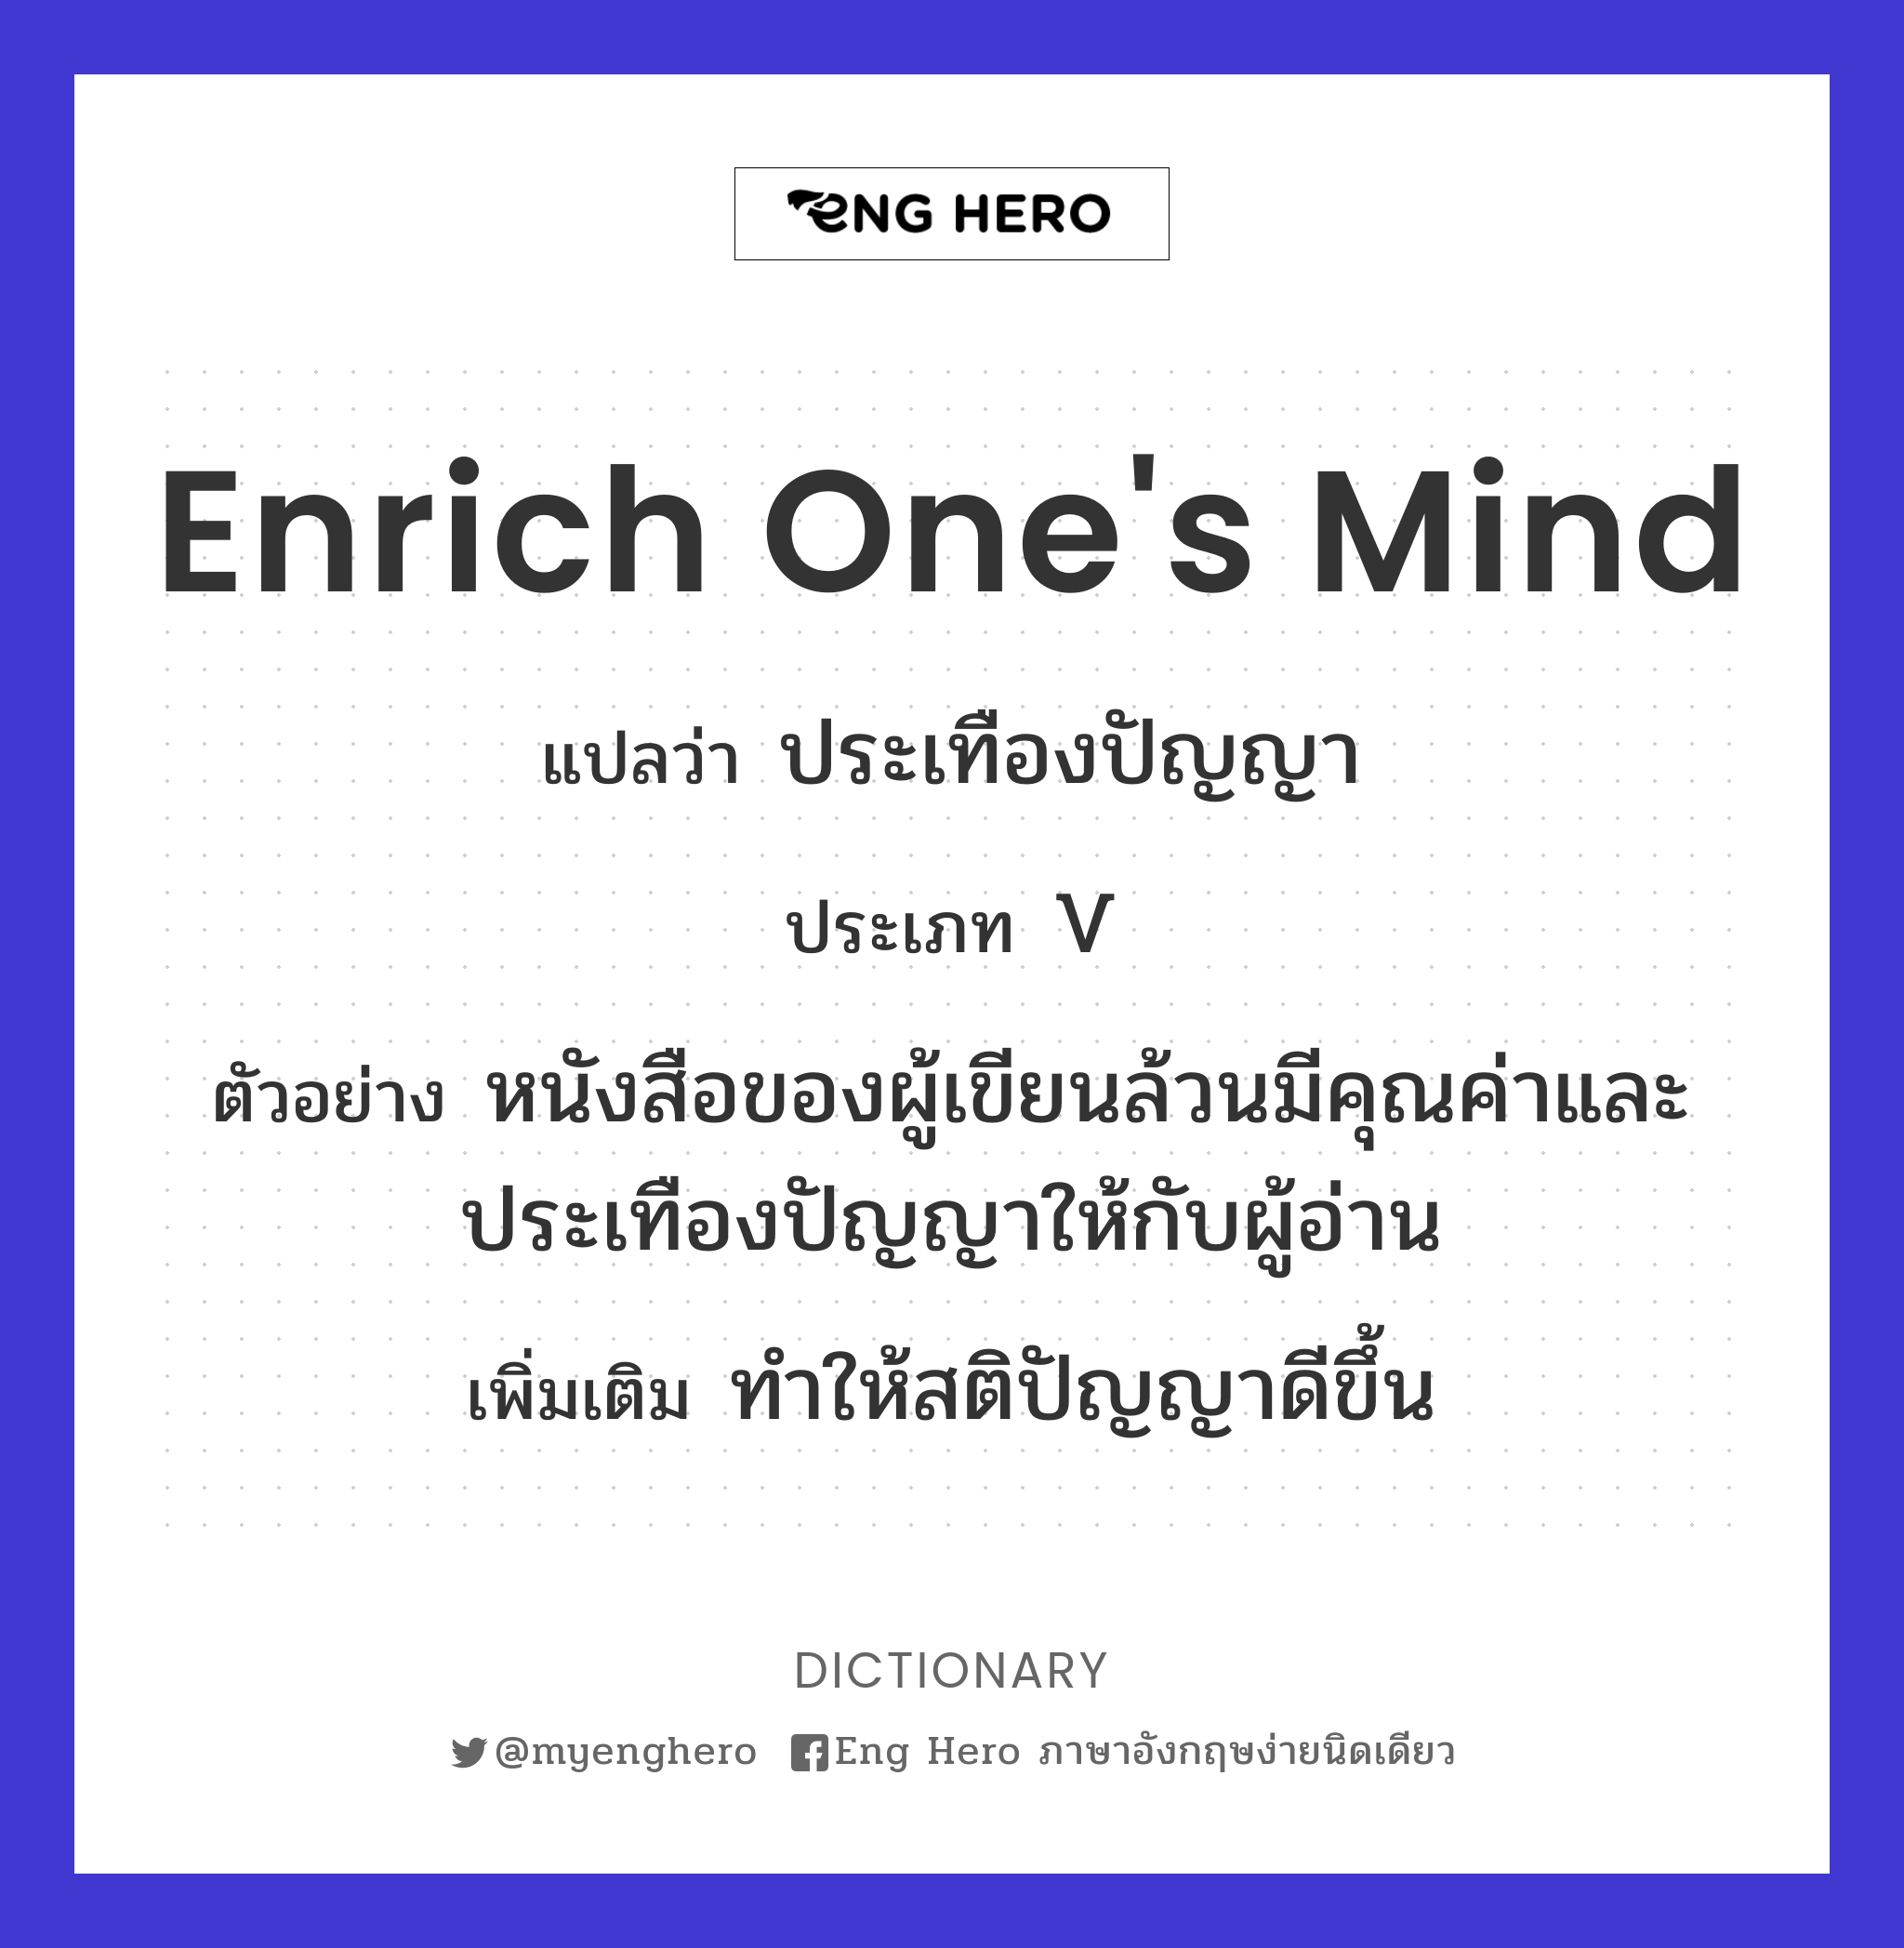 enrich one's mind